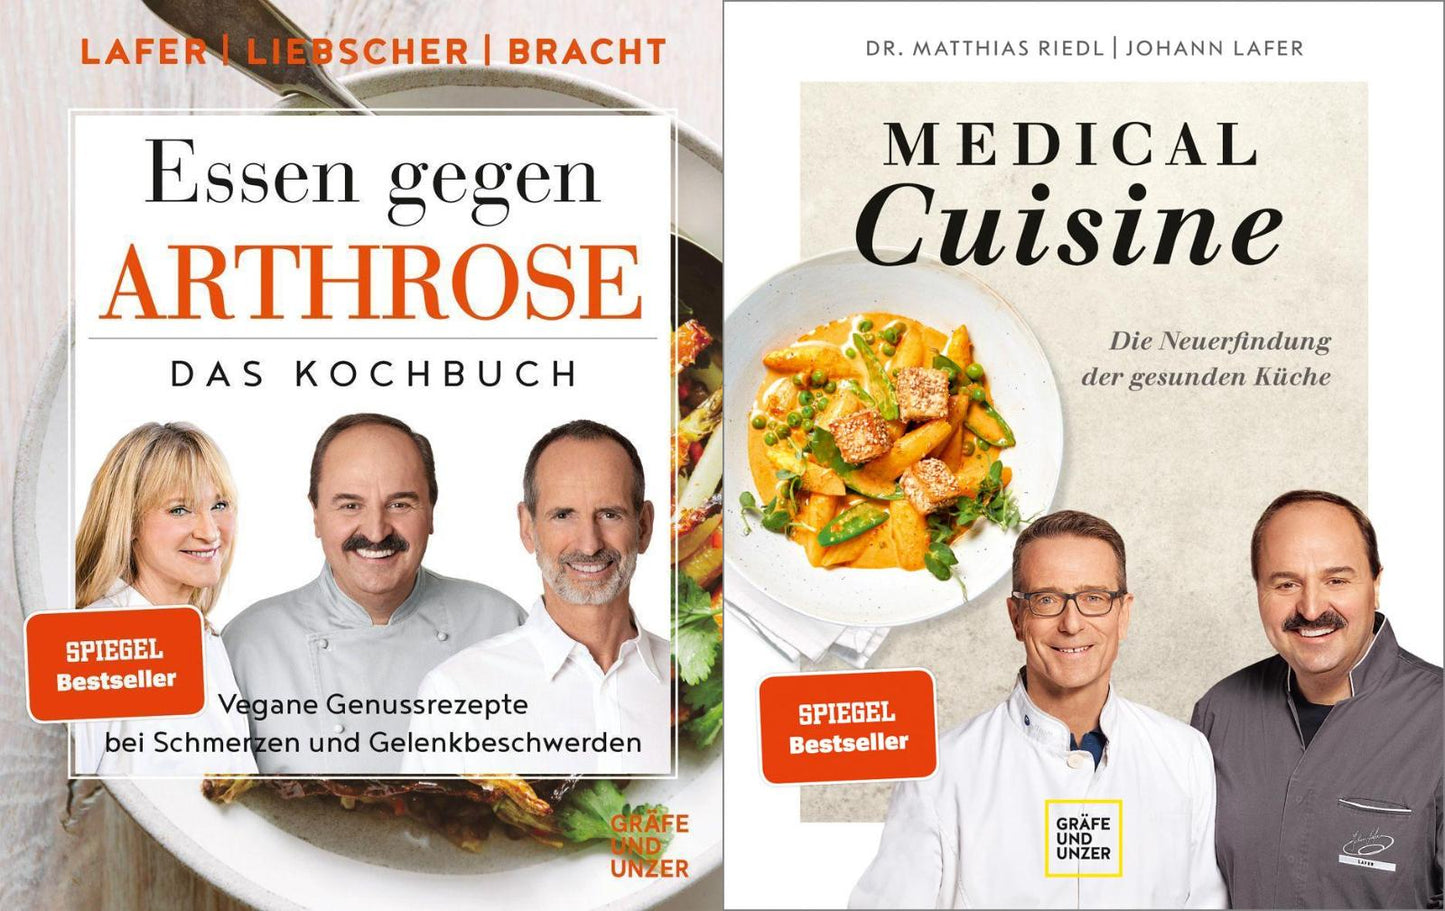 Essen gegen Arthrose + Medical Cuisine im Set plus 1 exklusives Postkartenset